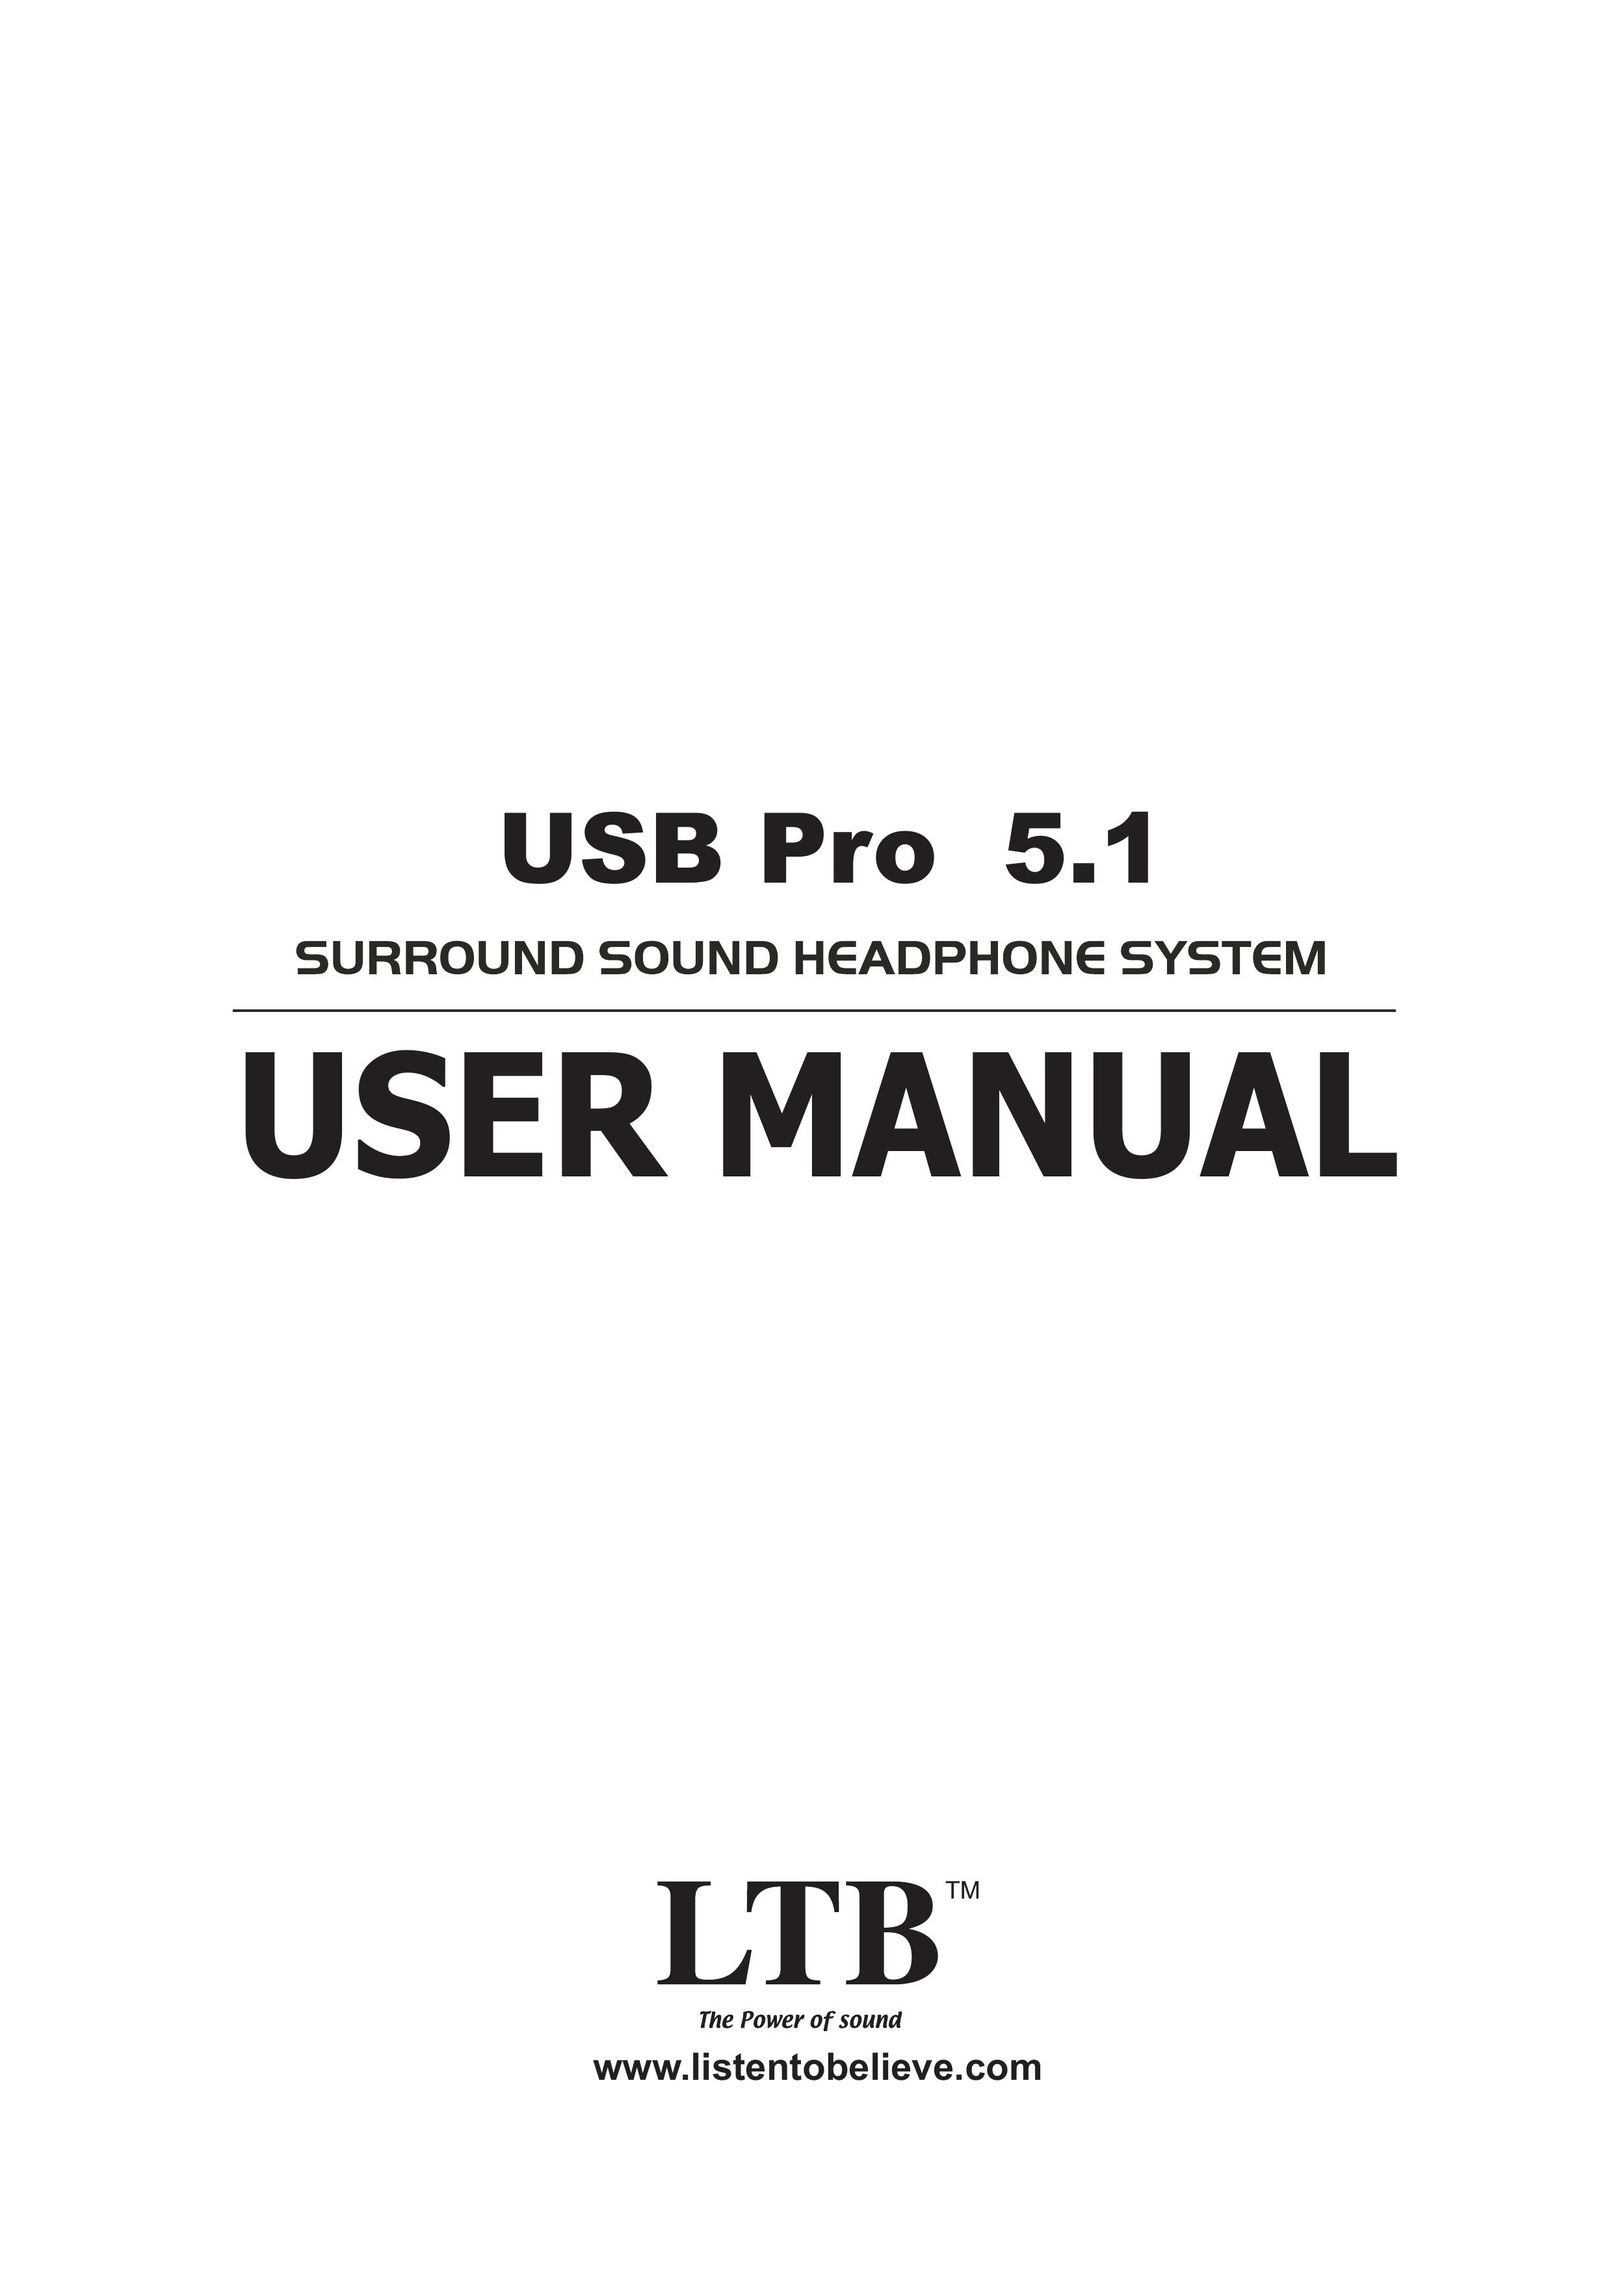 LTB Audio Systems USB Pro 5.1 Surround Sound Headphone System Headphones User Manual